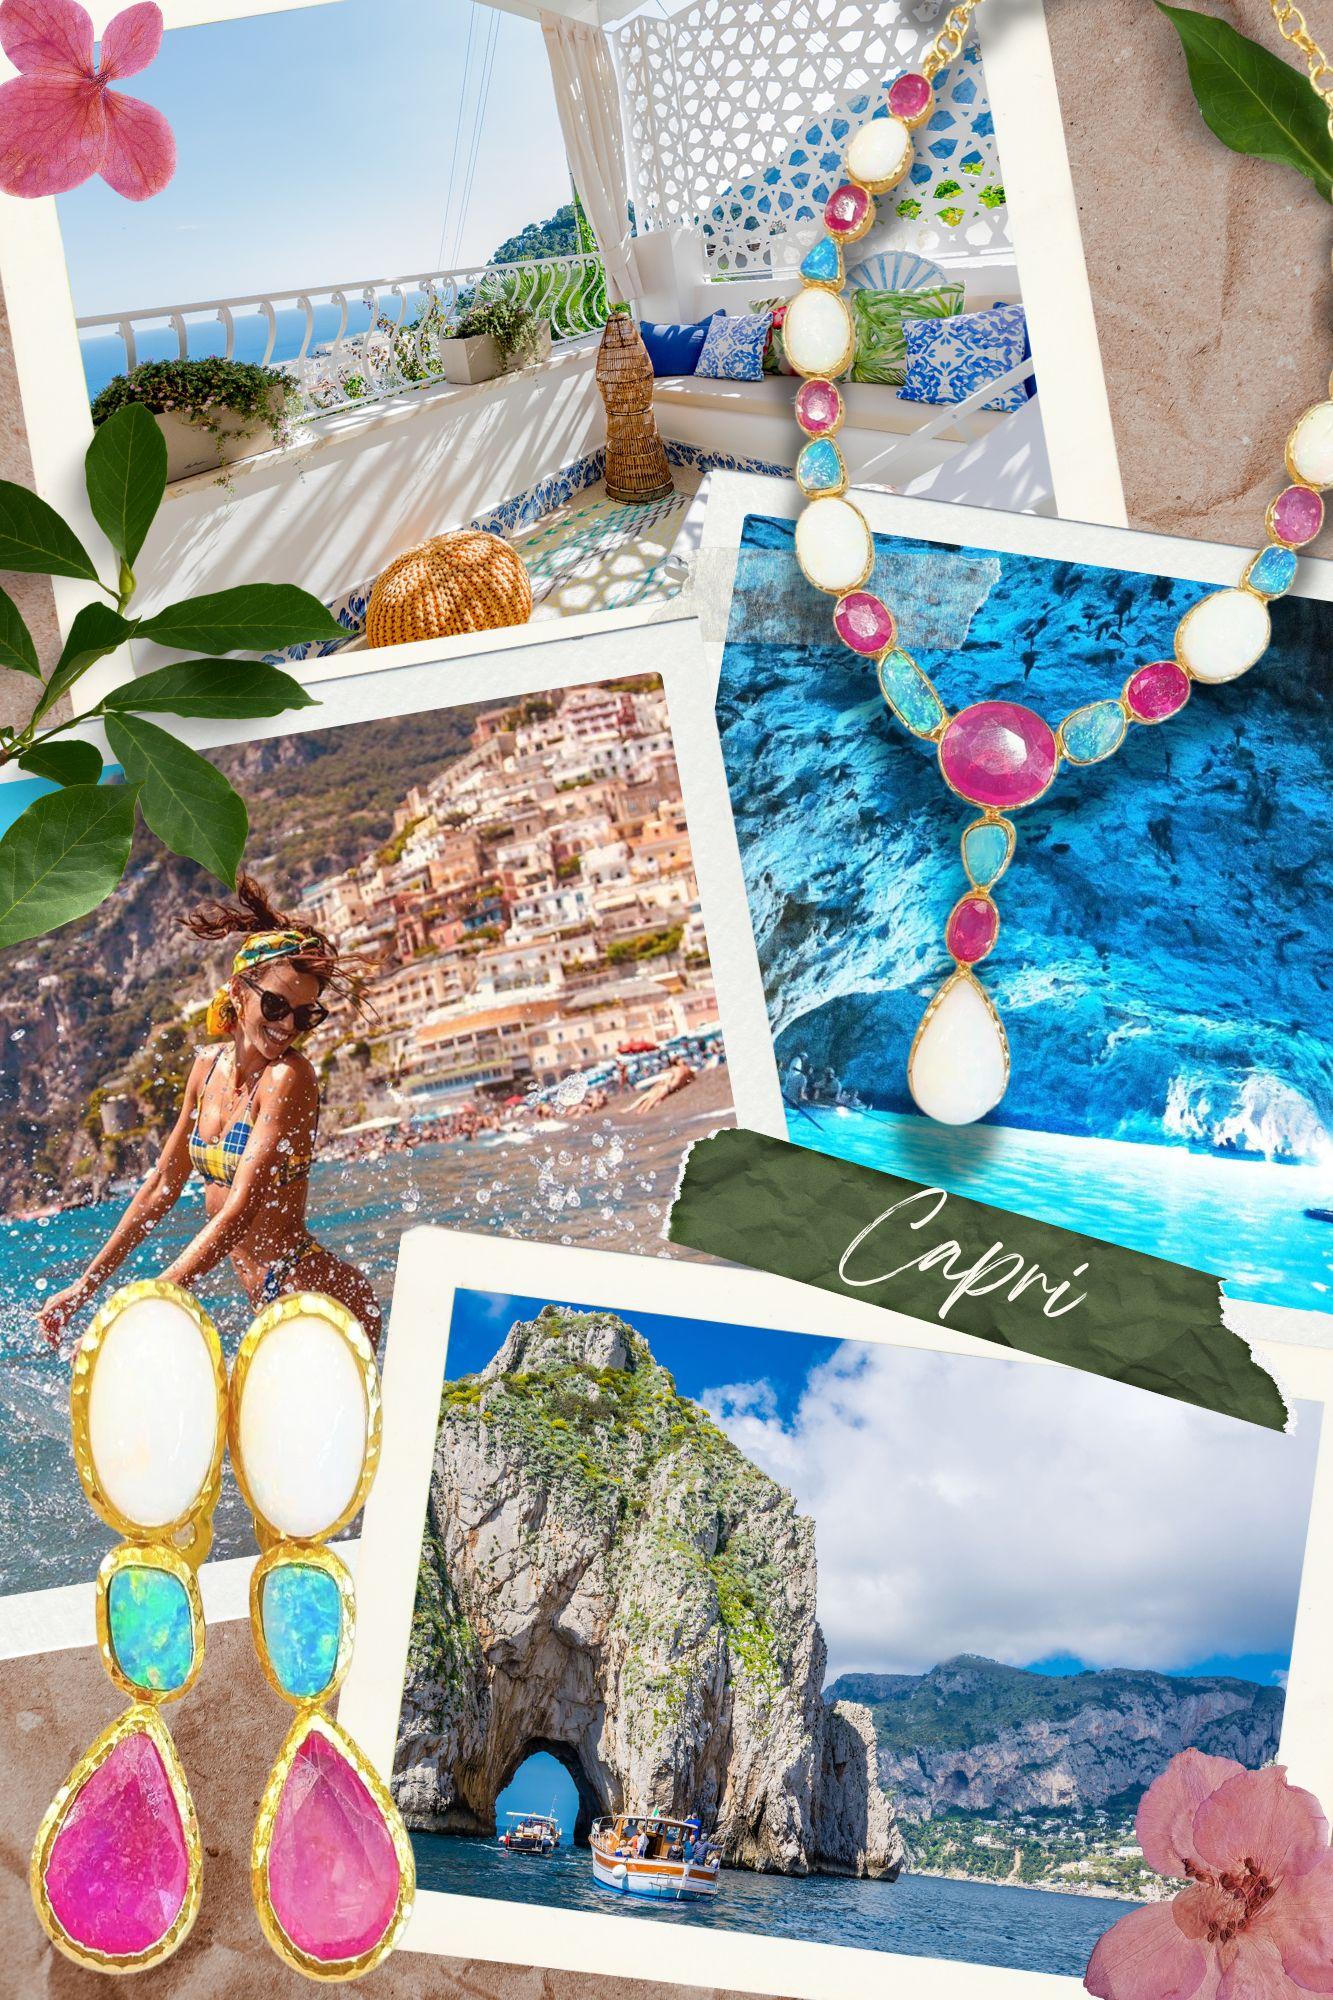 Bochic “Capri” White Fire Opal & Rose Cut Sapphires Set in 18K Gold & Silver  For Sale 9